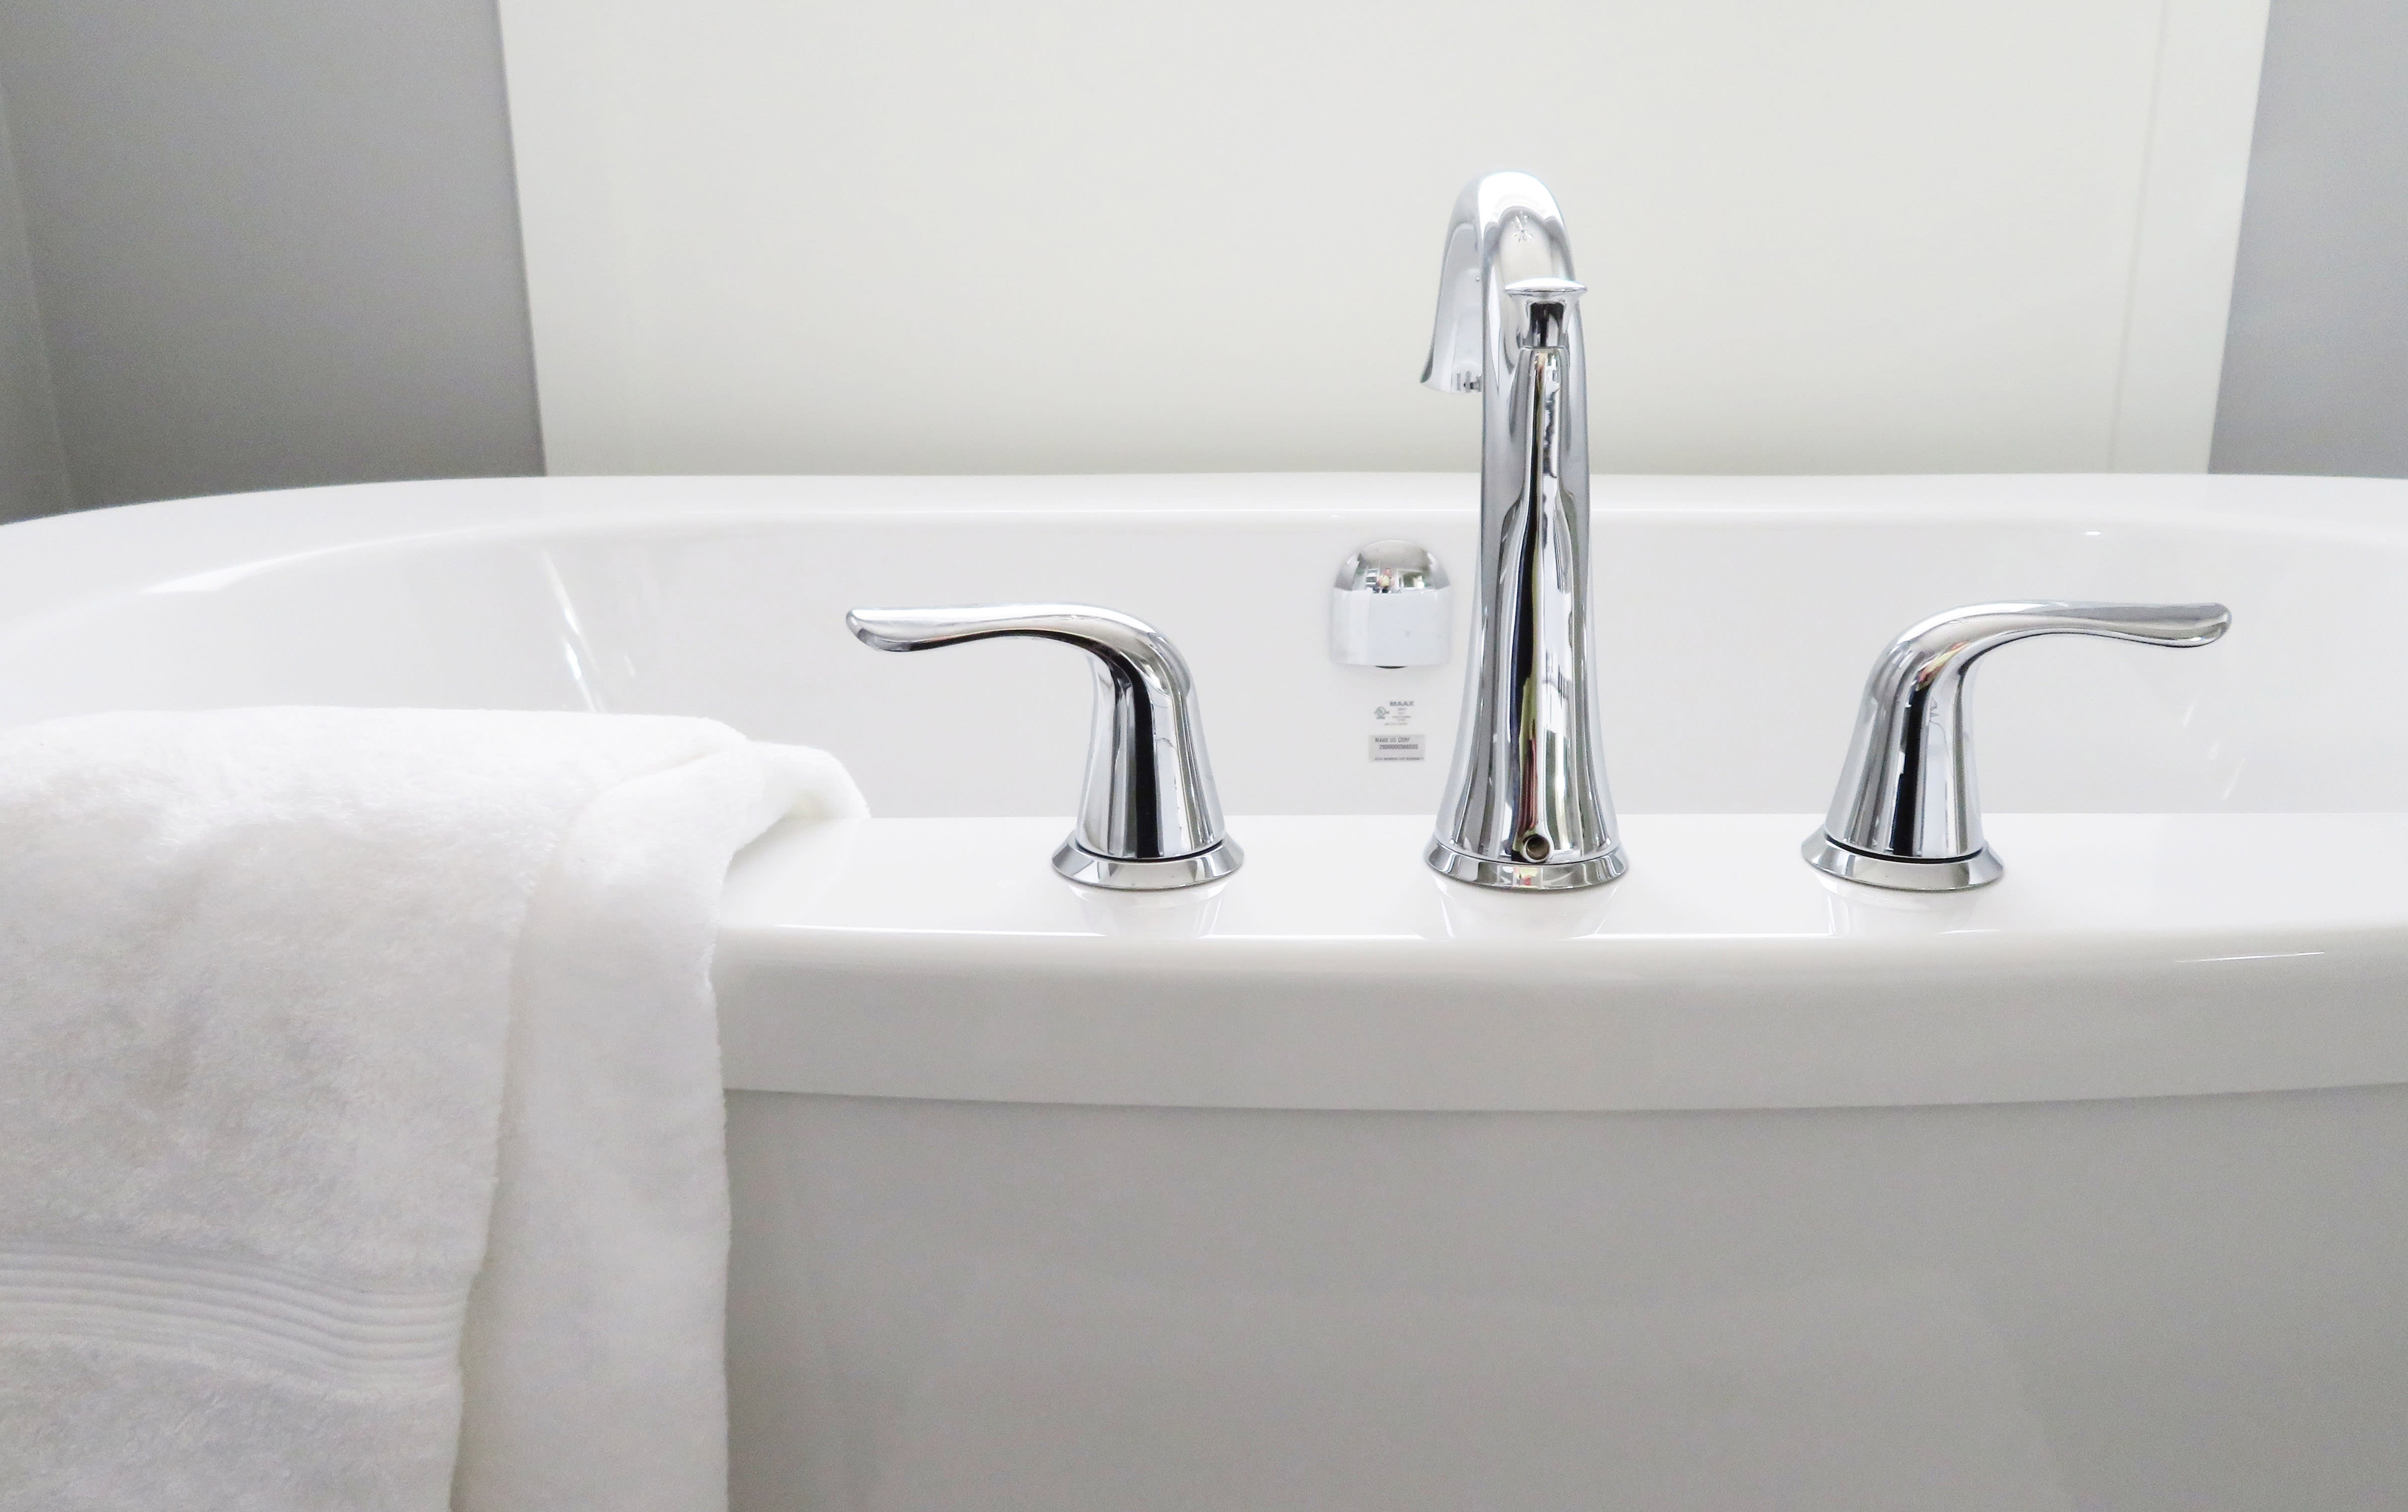 5 Ways To Clean An Old Porcelain Tub, Home Remedies To Clean Enamel Bathtub